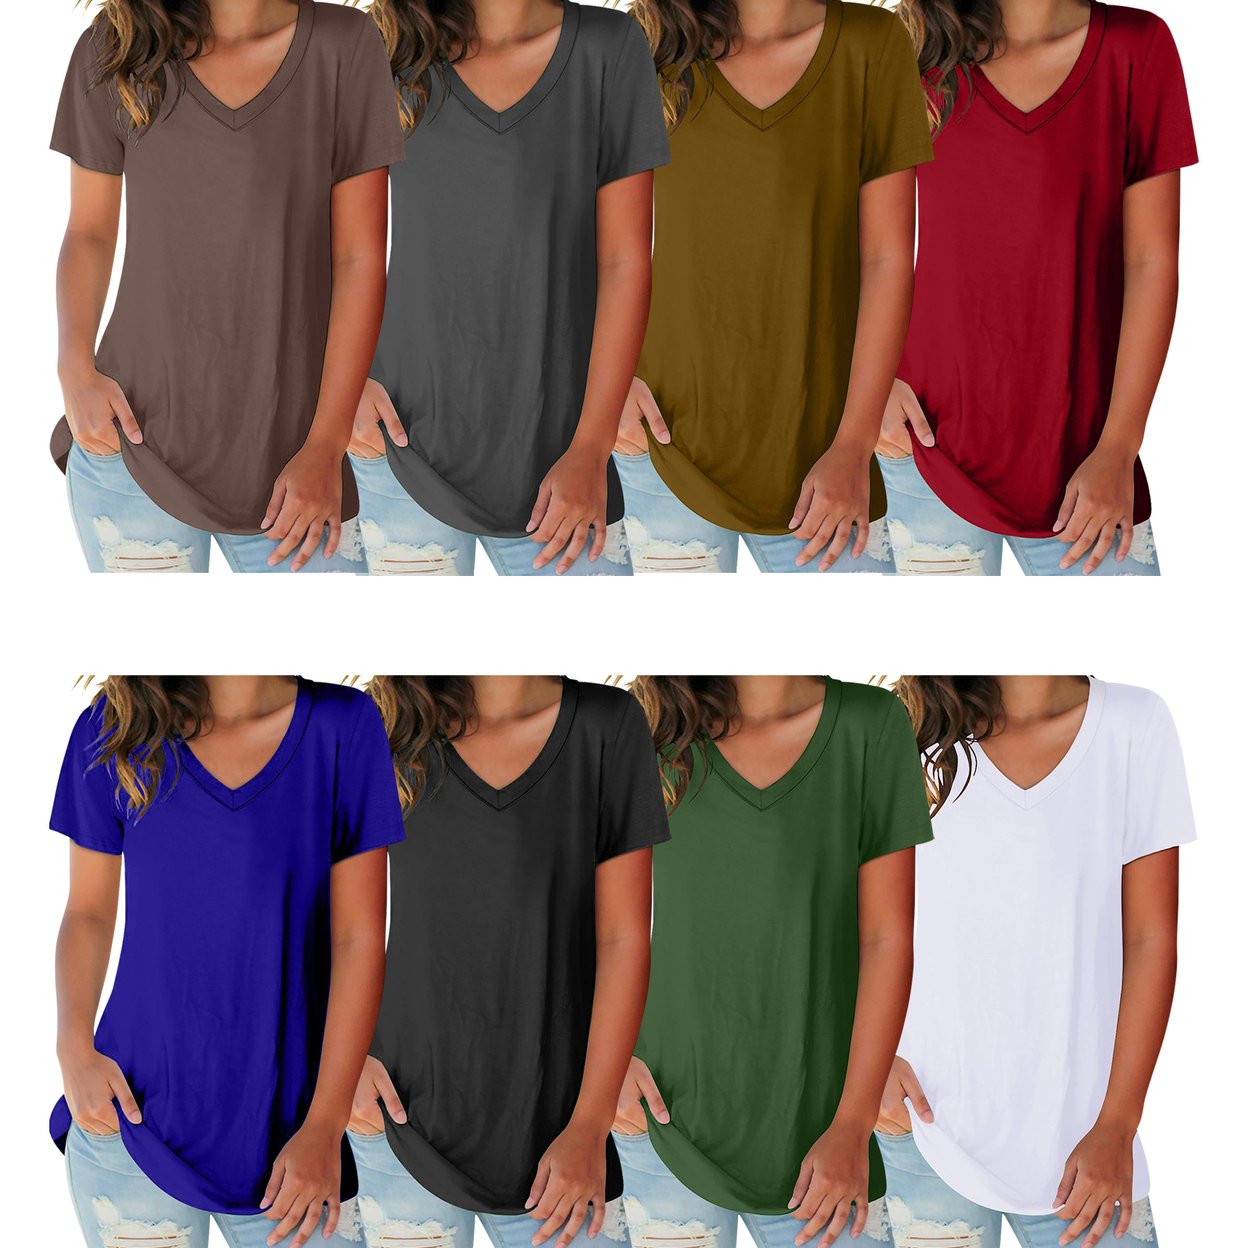 3-Pack: Women's Ultra Soft Smooth Cotton Blend Basic V-Neck Short Sleeve Shirts - Black, White, Brown, Large